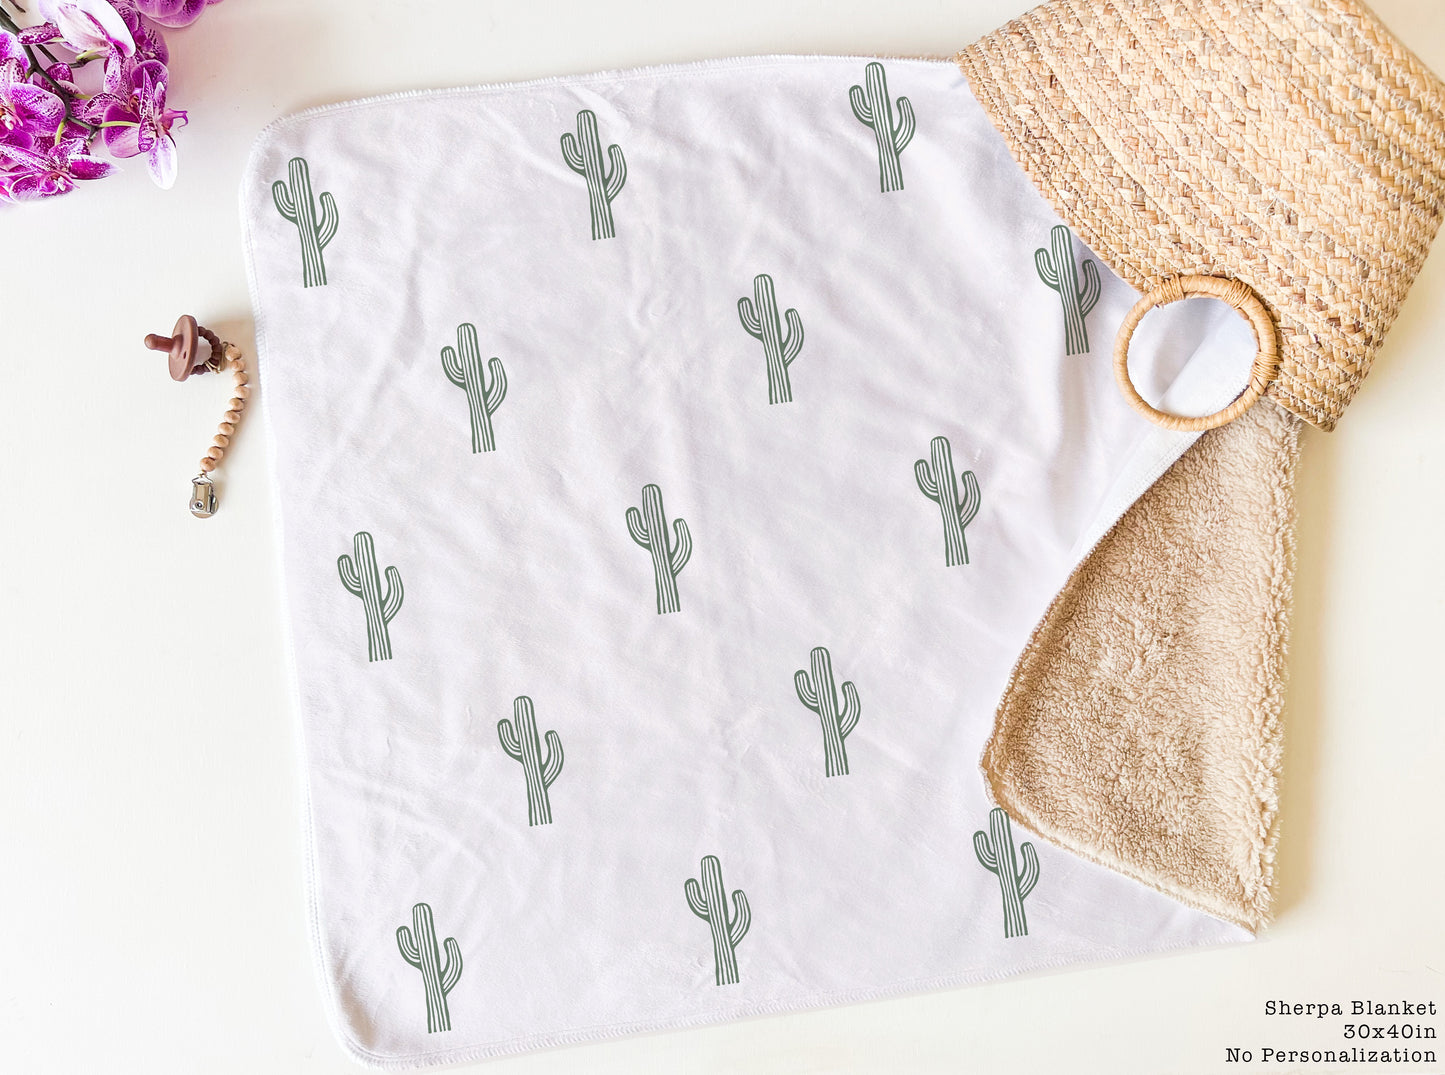 The Cactus Print Sherpa Blanket